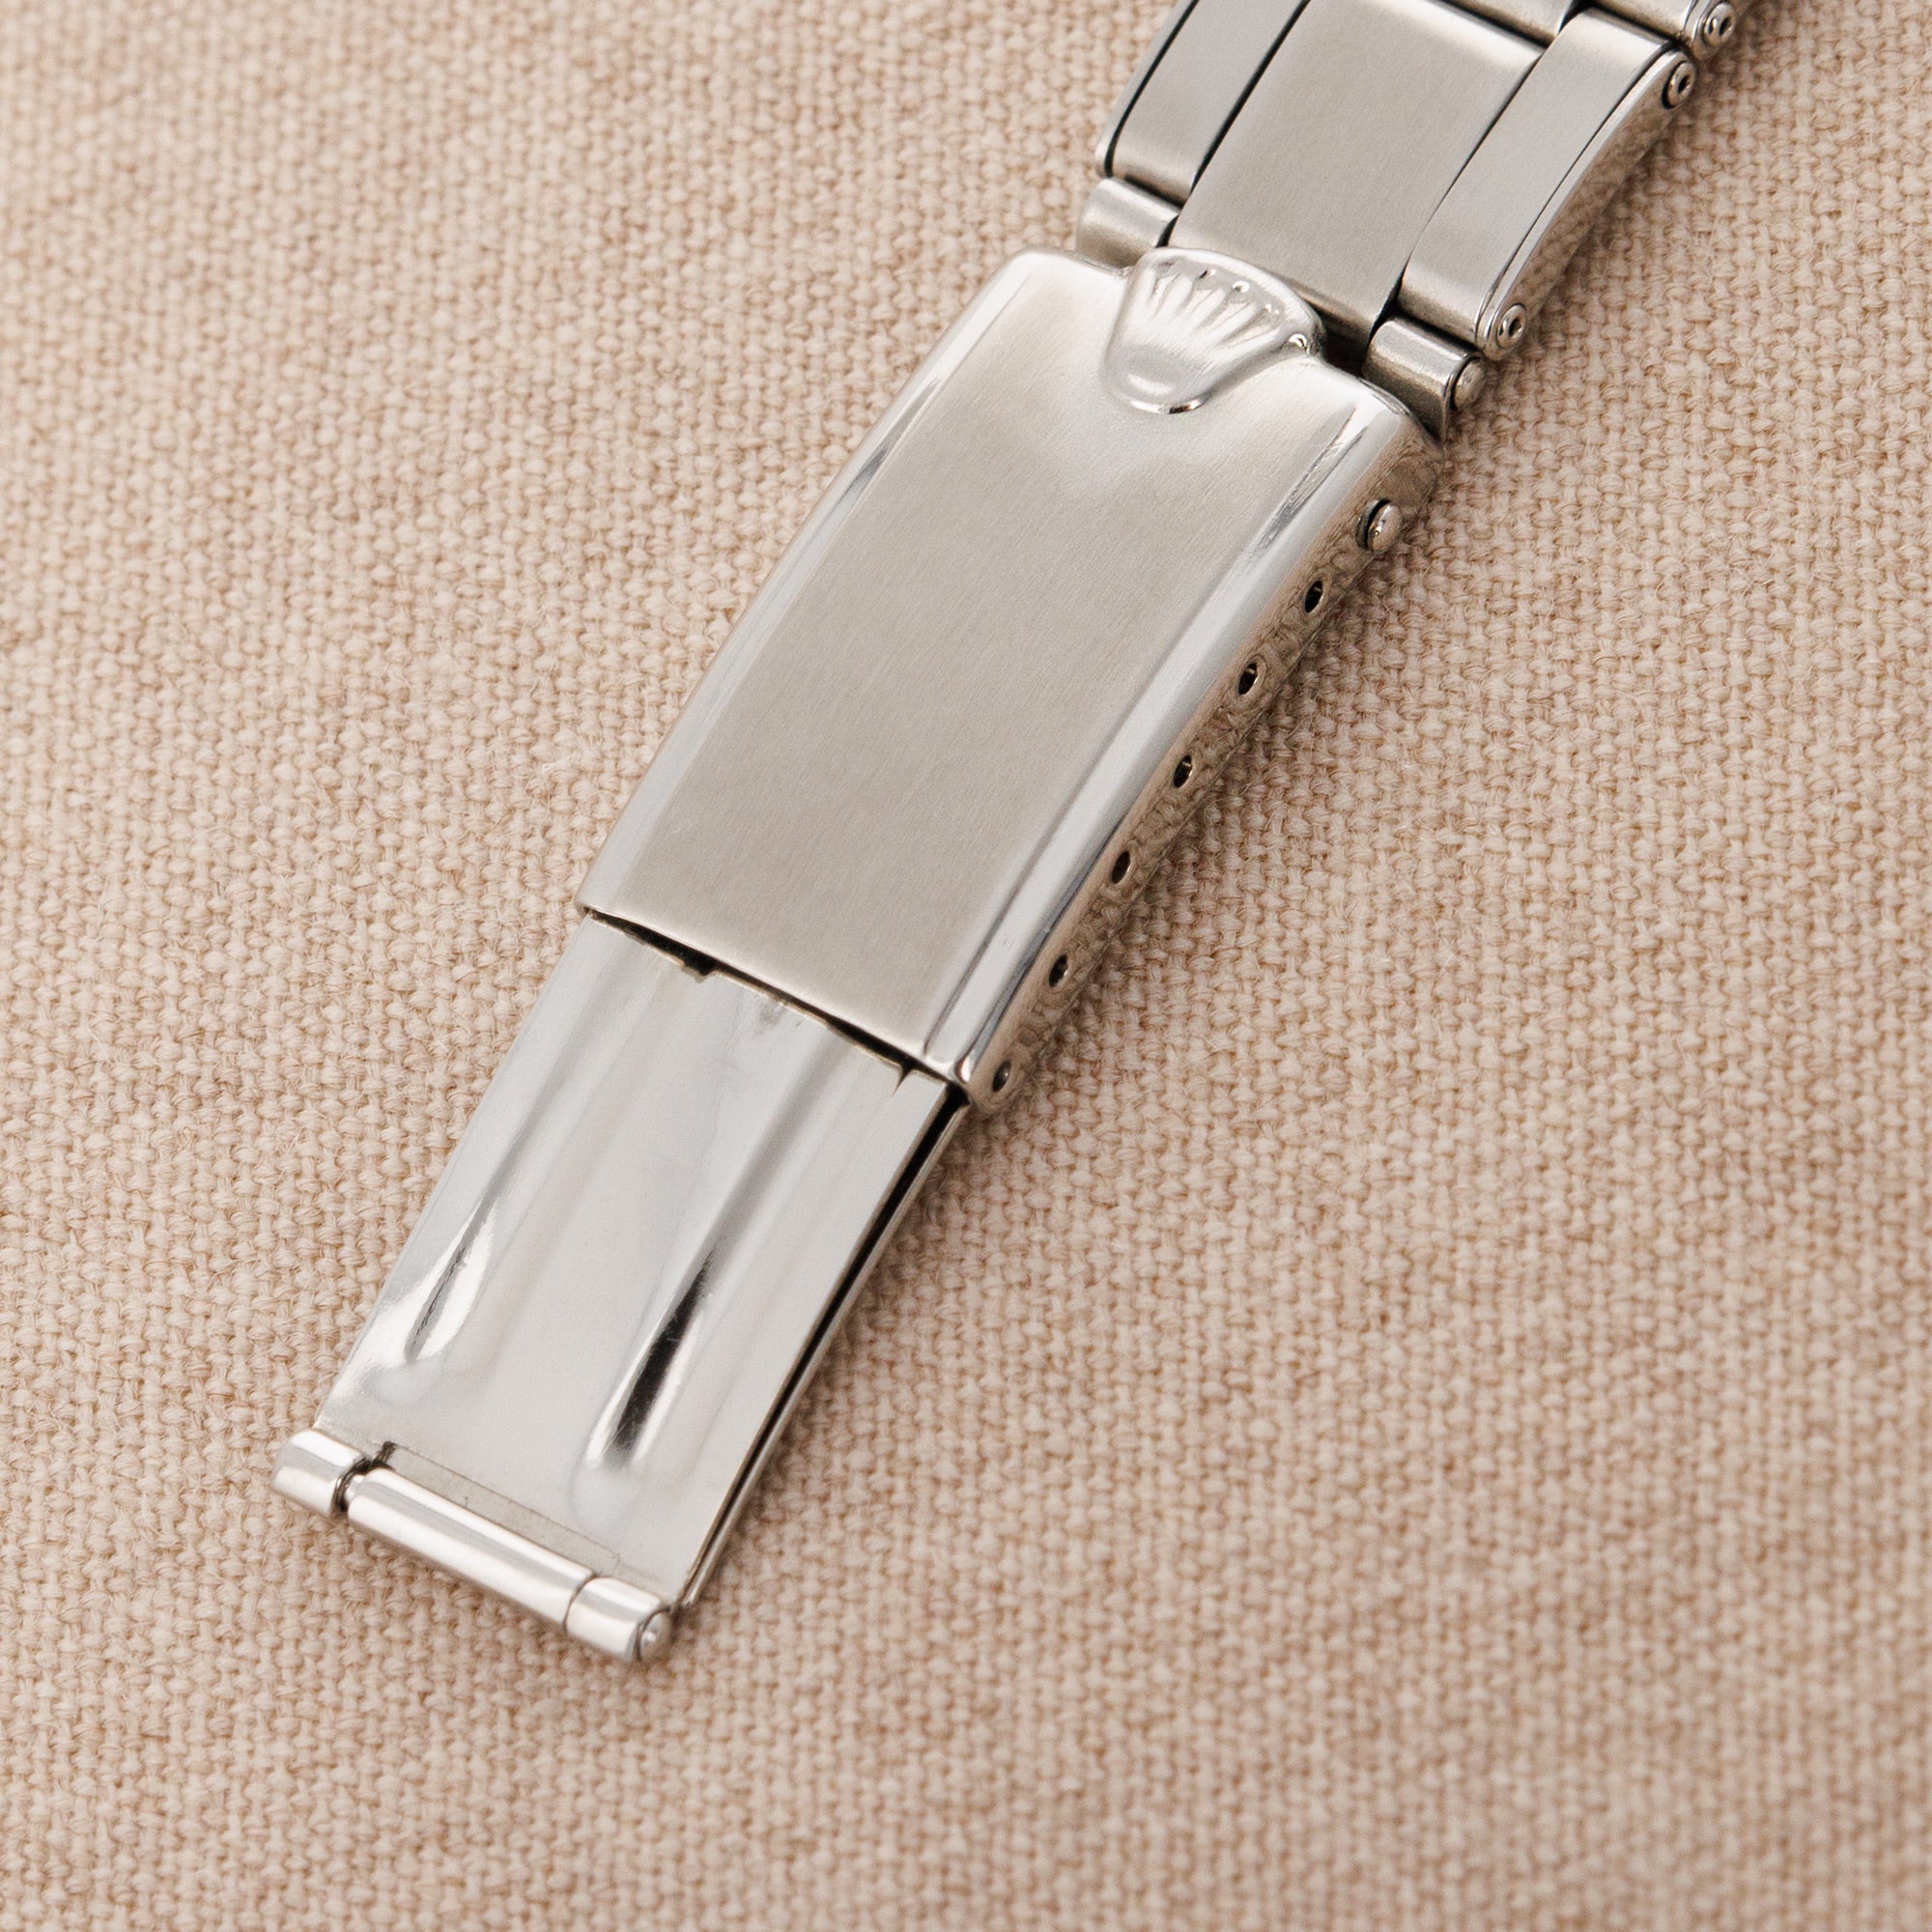 Rolex Steel Paul Newman Daytona Watch Ref. 6239